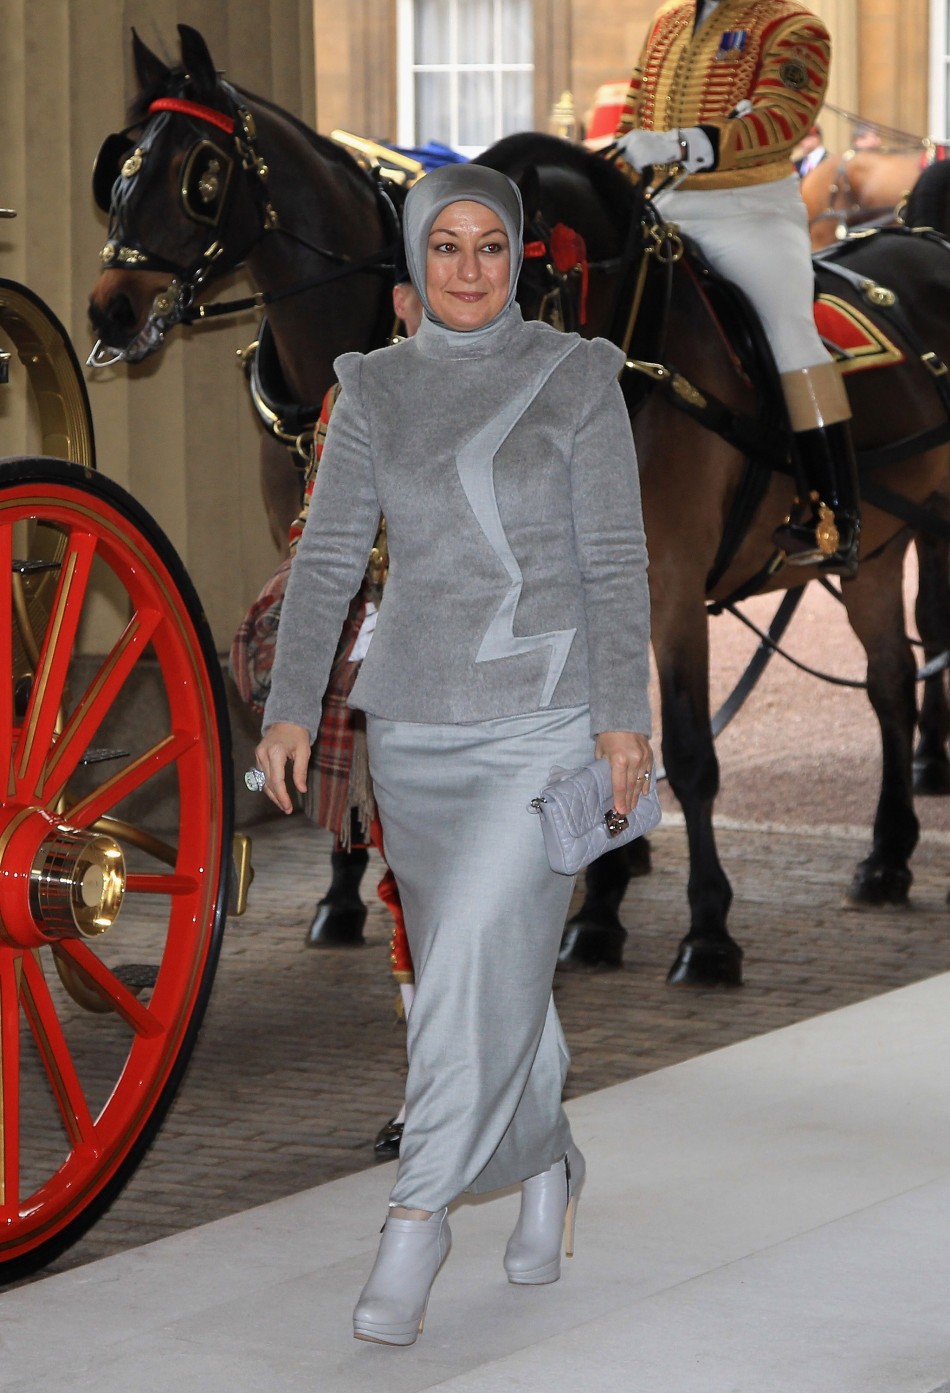 Hayrunnisa Gul, wife of Turkeys President Abdullah Gul arrives at Buckingham Palace during a state visit in London November 22, 2011.